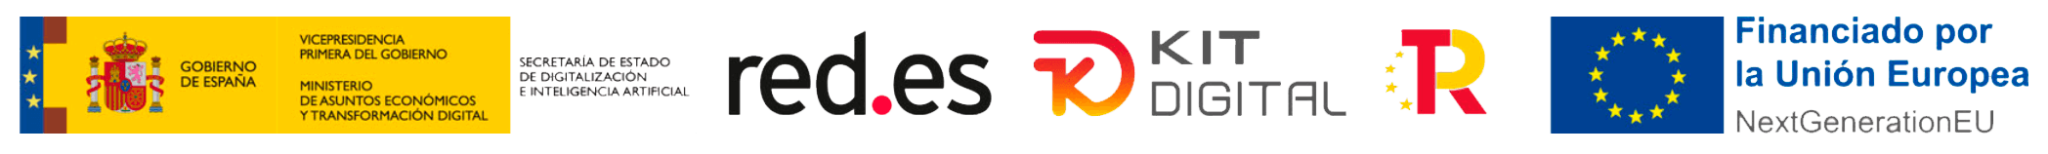 Logos de kit digital